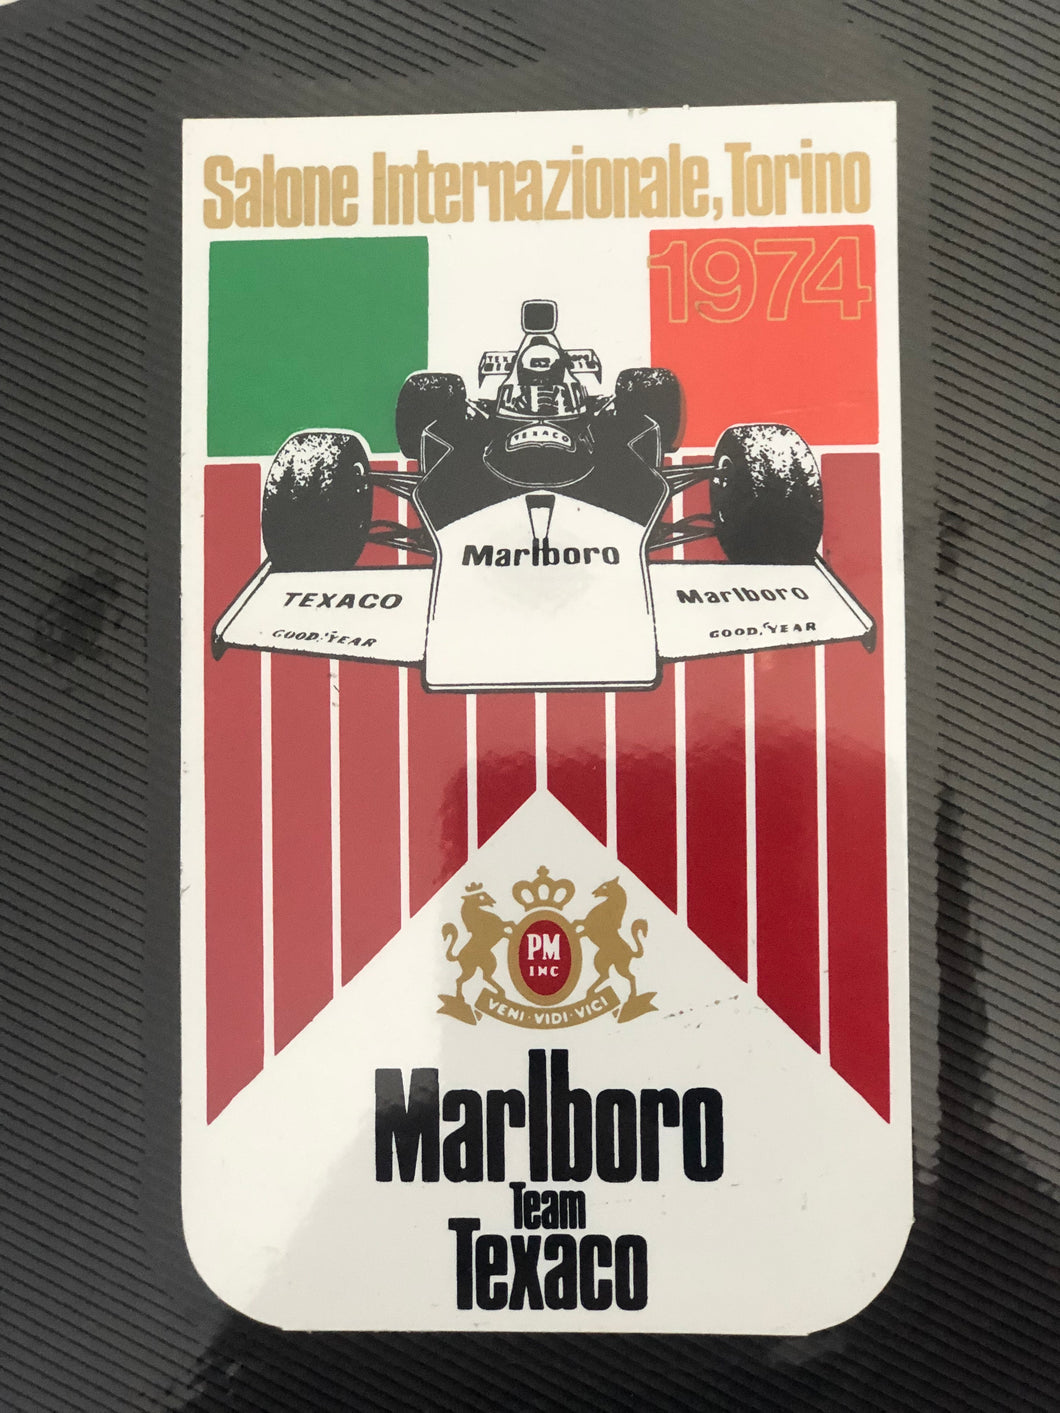 Marlboro team Texaco - Salon International, Torino 1974